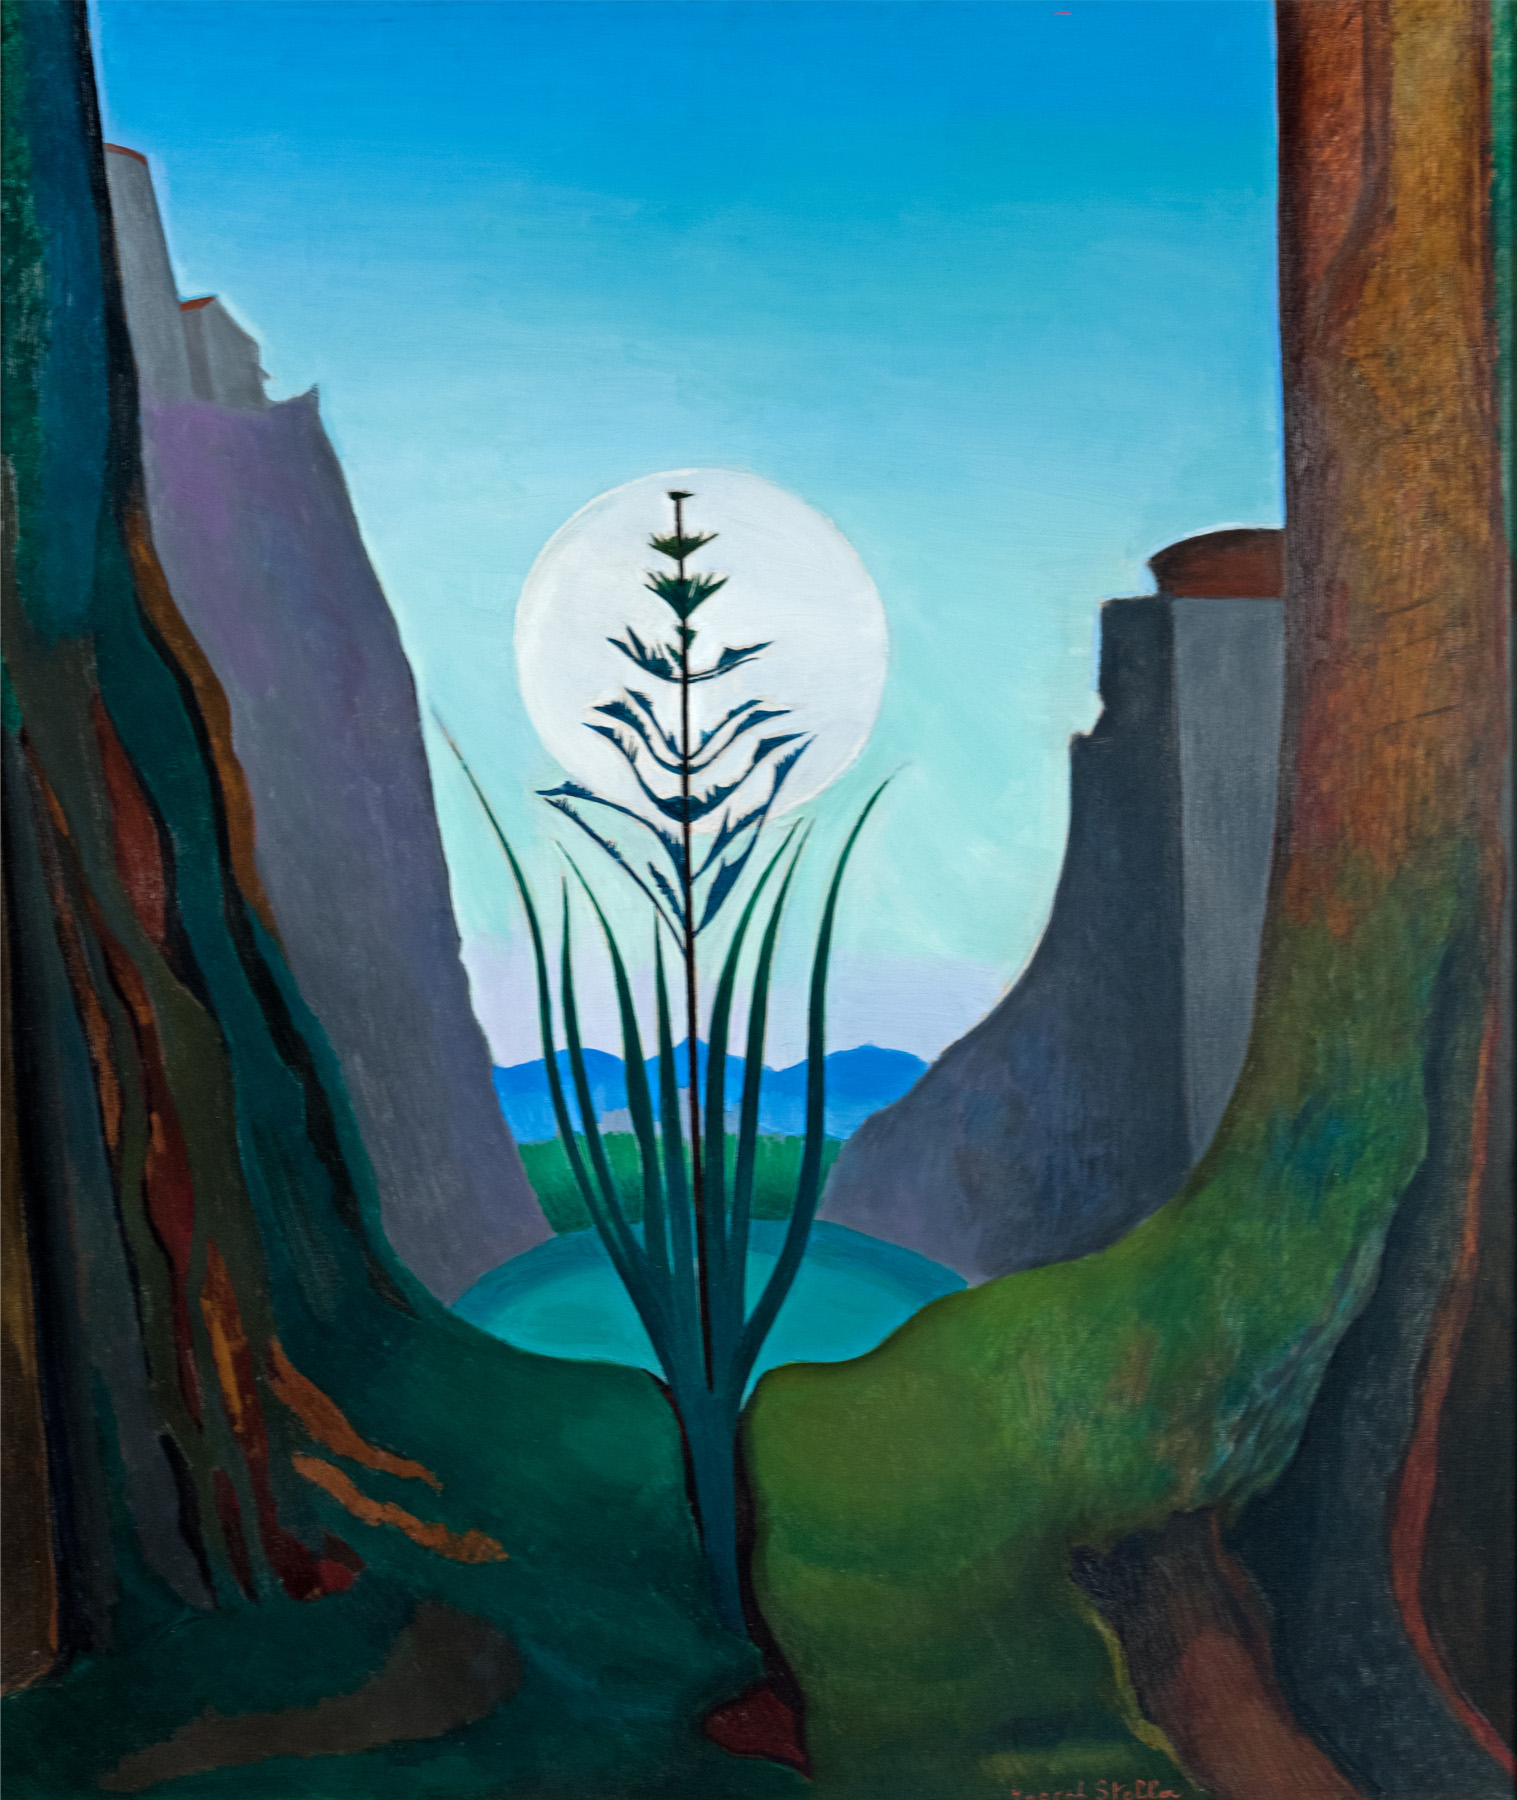 Joseph Stella (1877-1946), "The Little Lake," 1926, oil on canvas, 40 x 34 in. (101.6 x 86.4 cm).